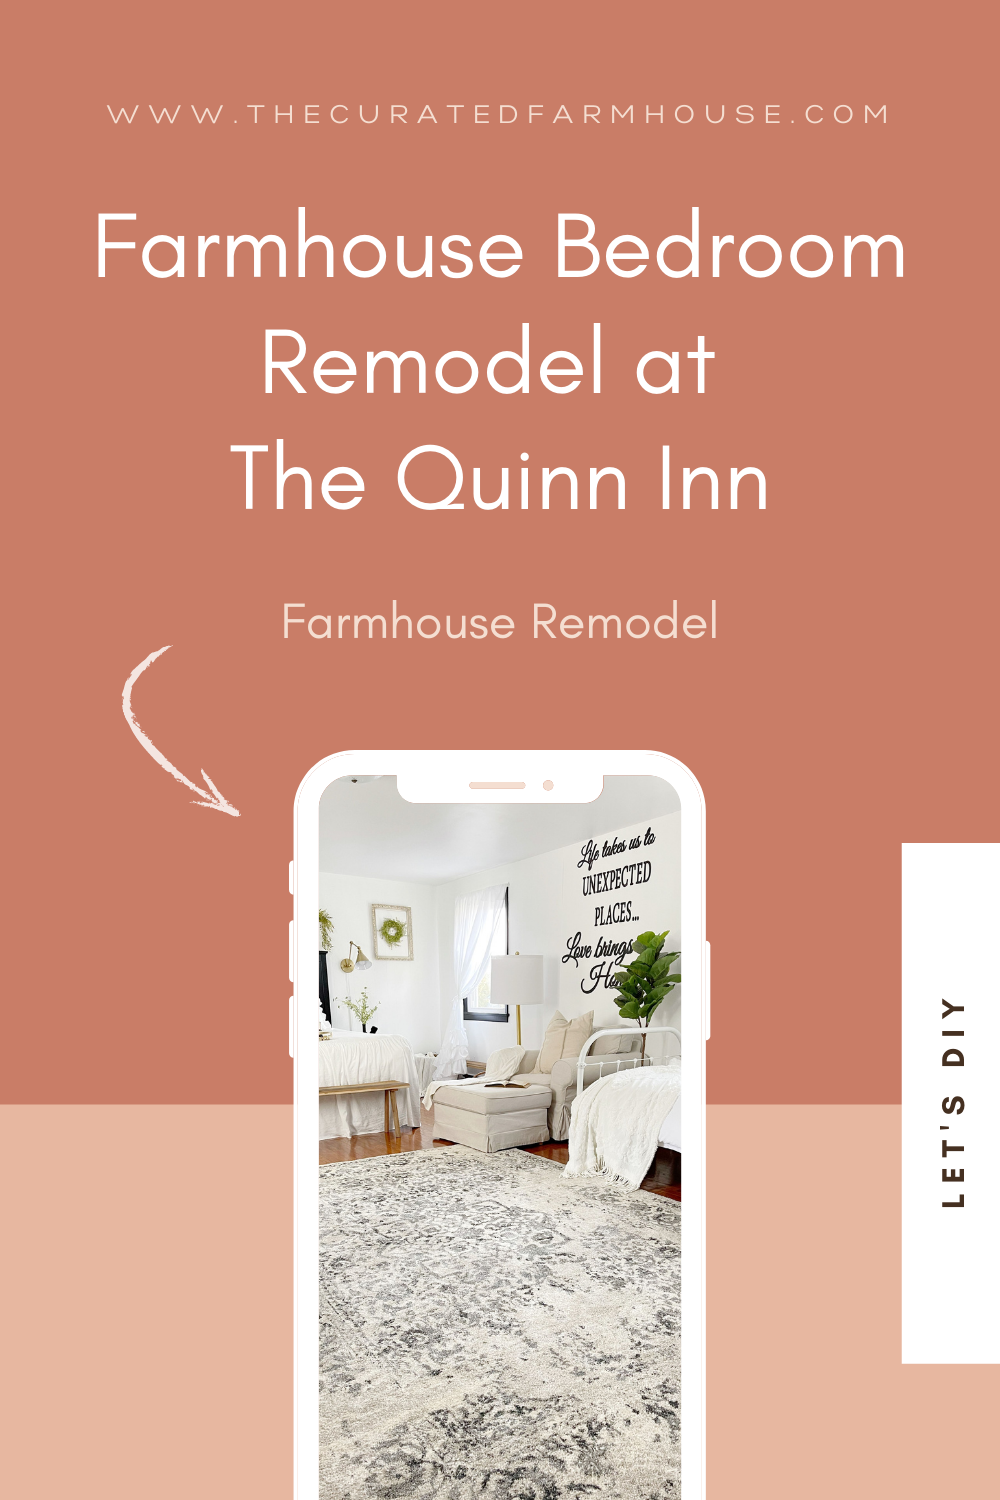 Farmhouse Bedroom Remodel at The Quinn Inn